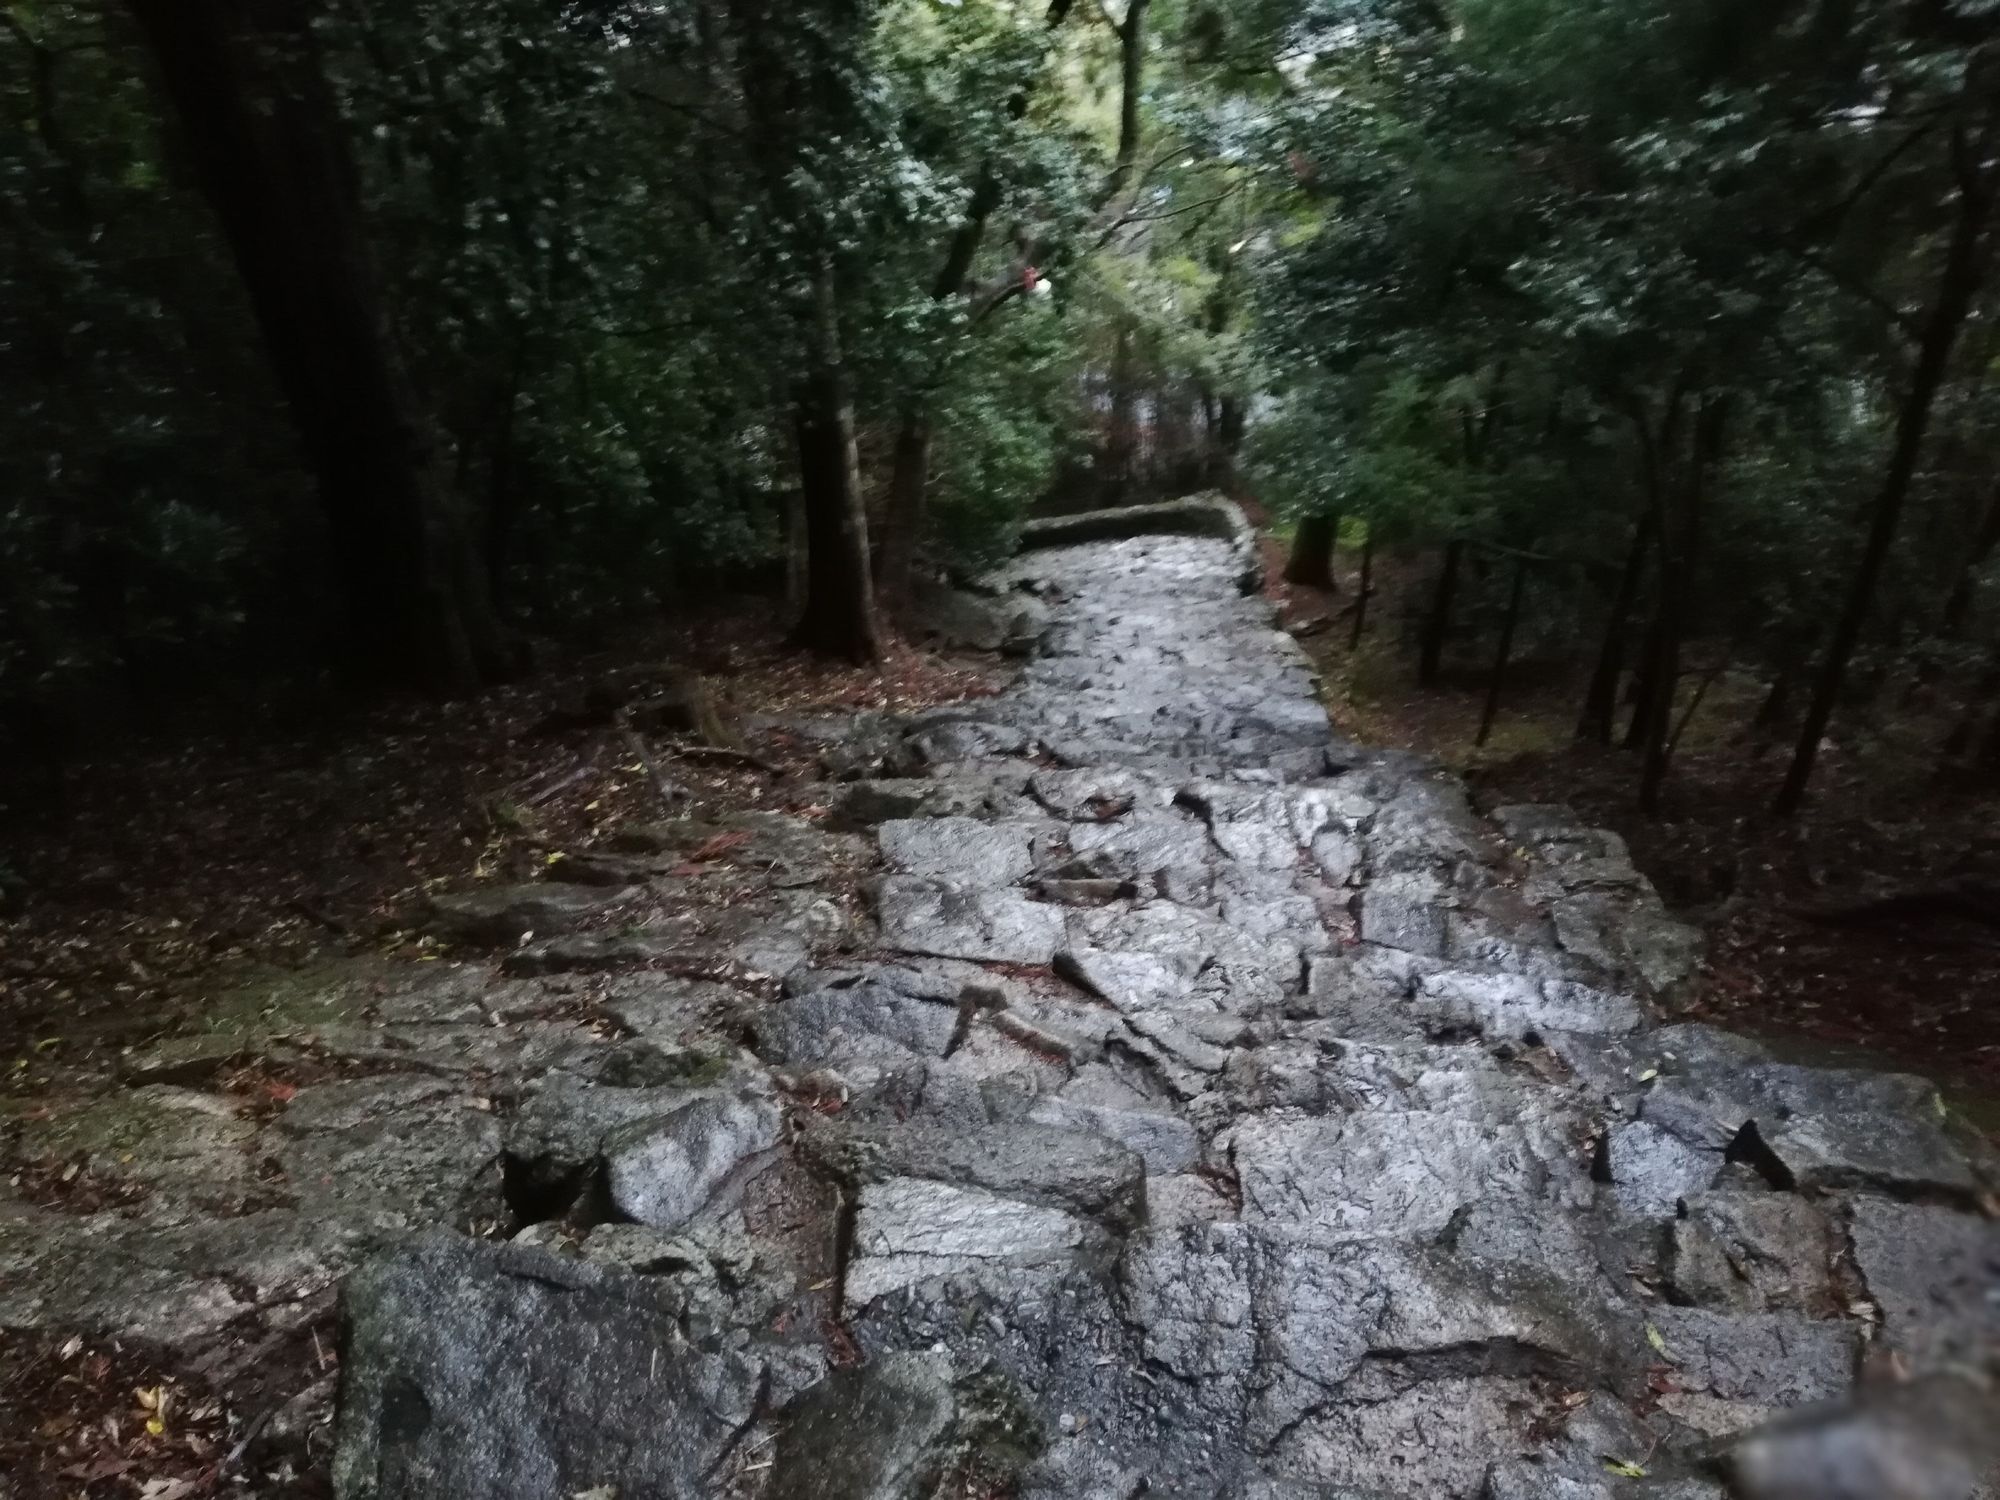 Kumano Kodo Sacred Pilgrimage